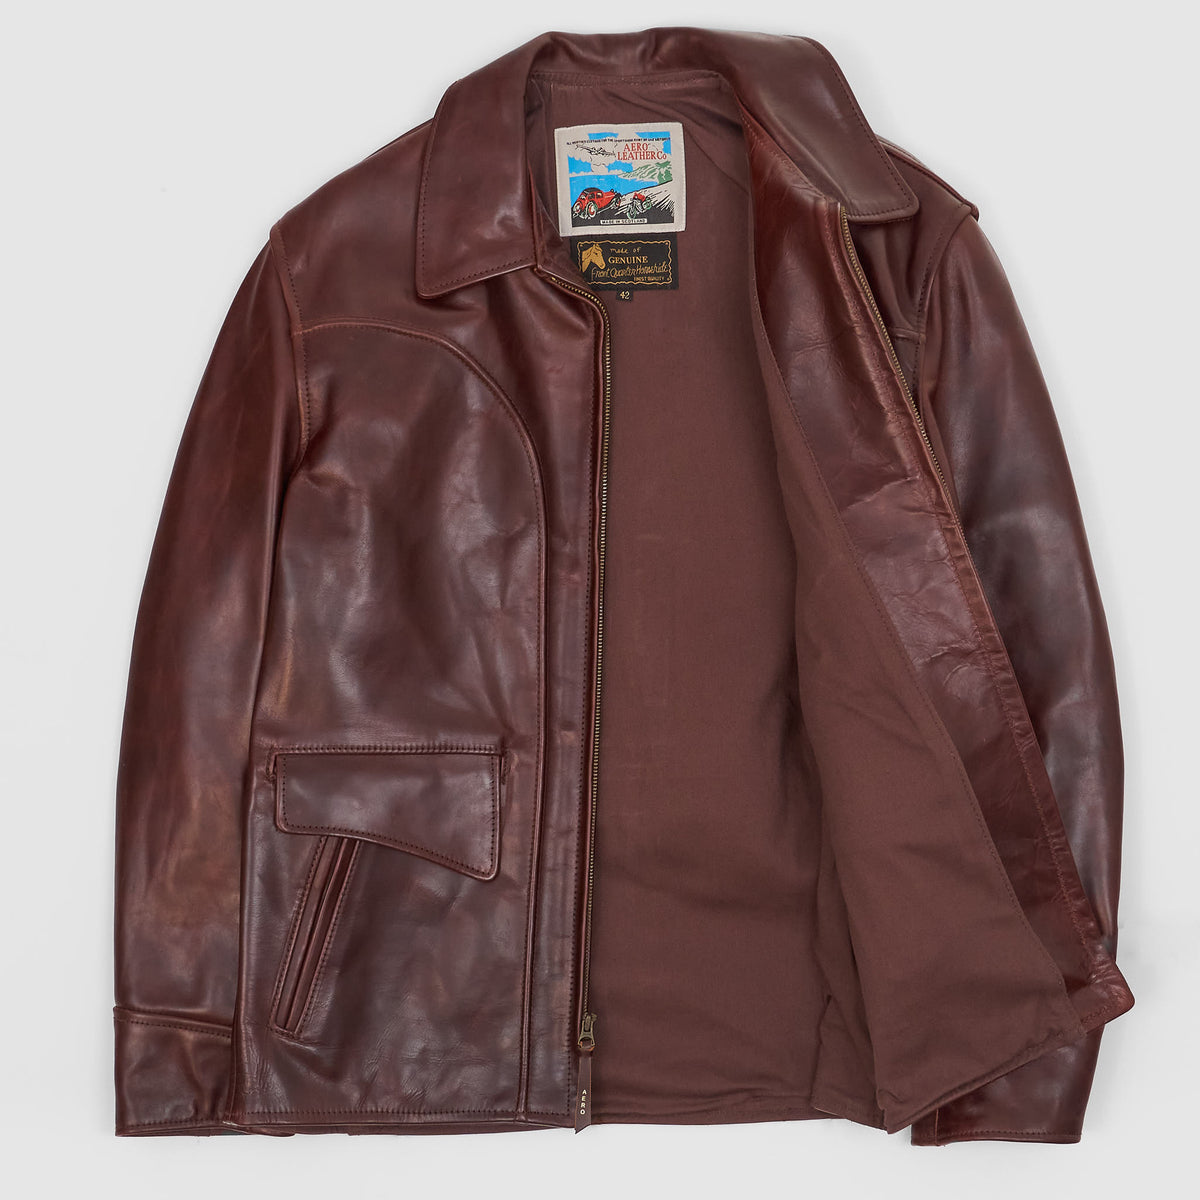 Aero Leathers Hercules Leather Jacket - DeeCee style